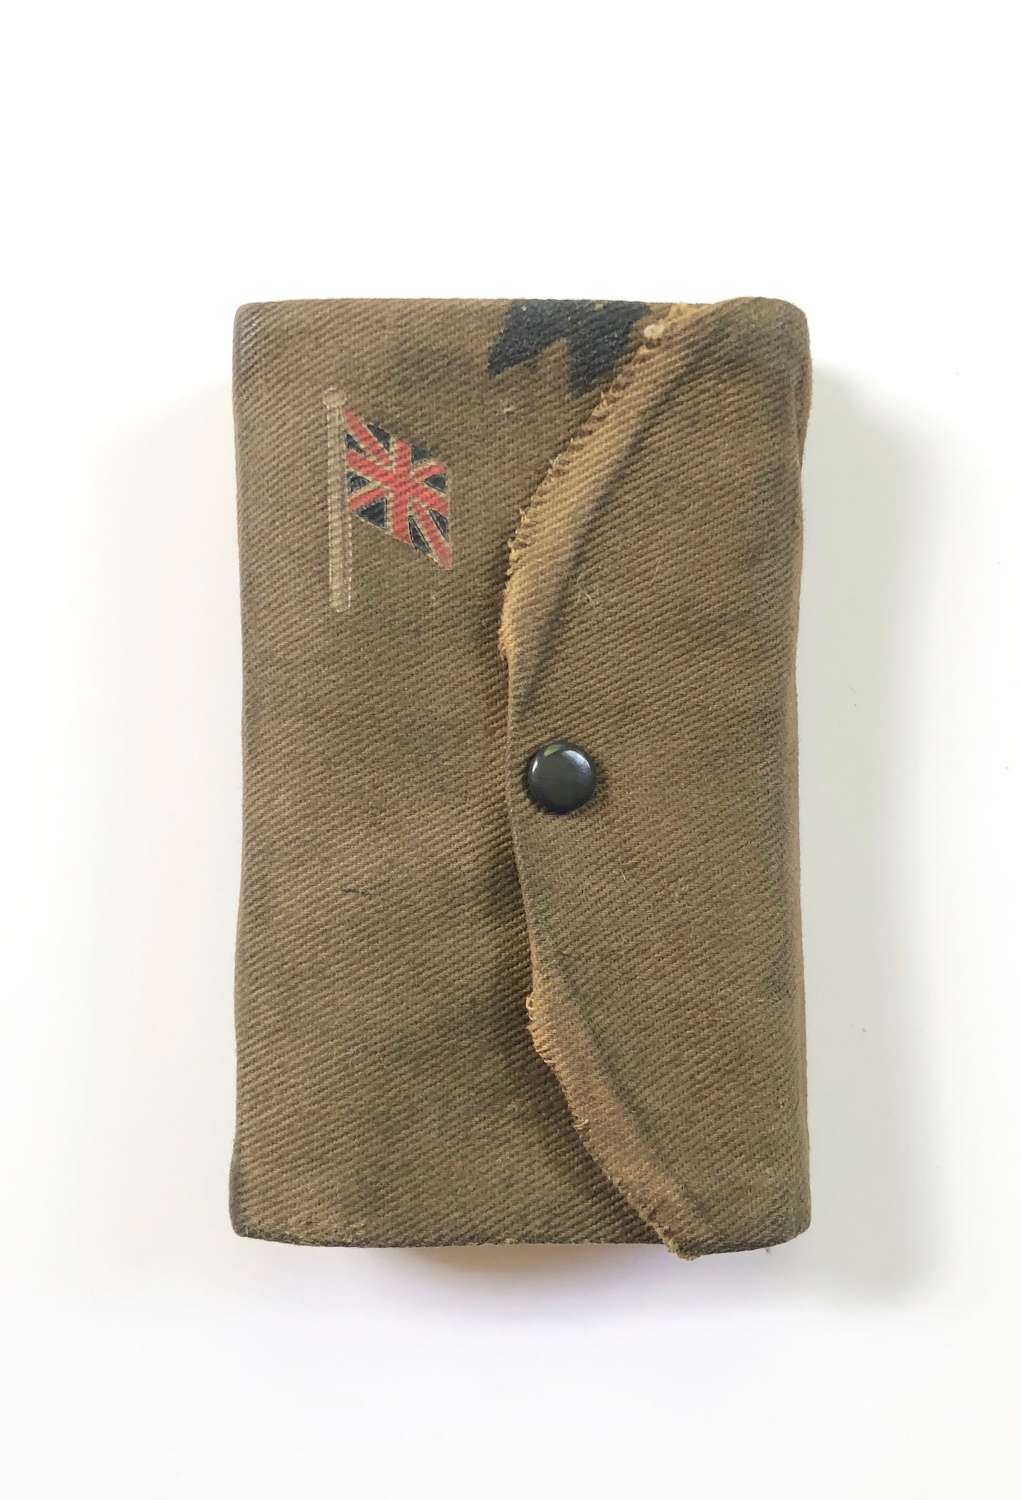 WW1 British Tommy Comfort Pocket Bible.